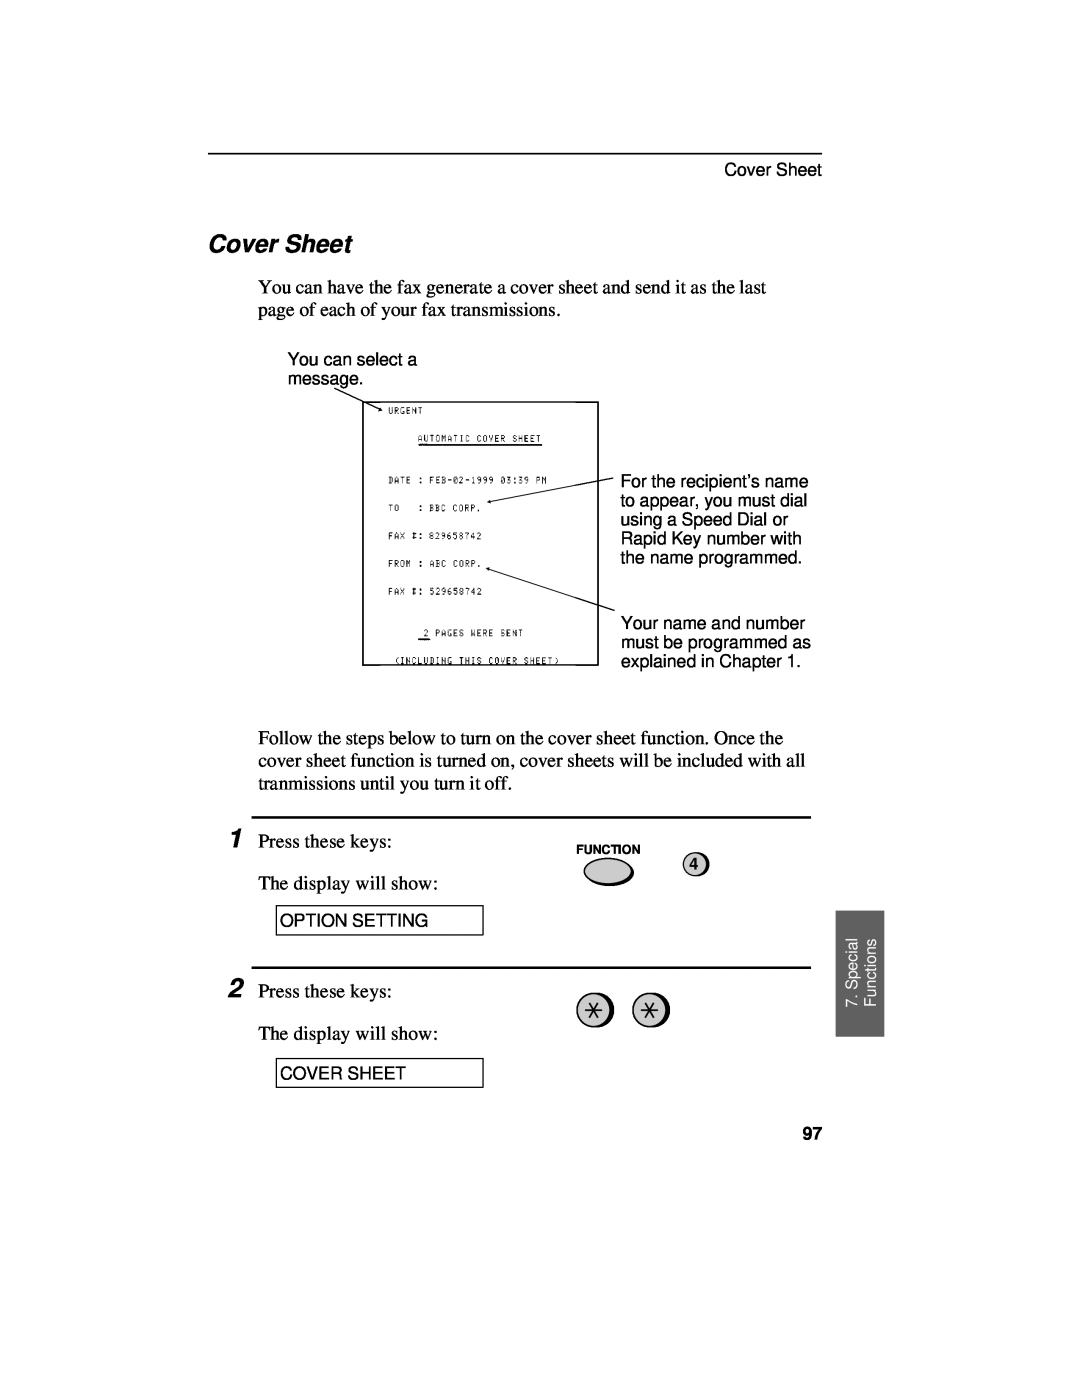 Sharp UX-460 operation manual Cover Sheet 